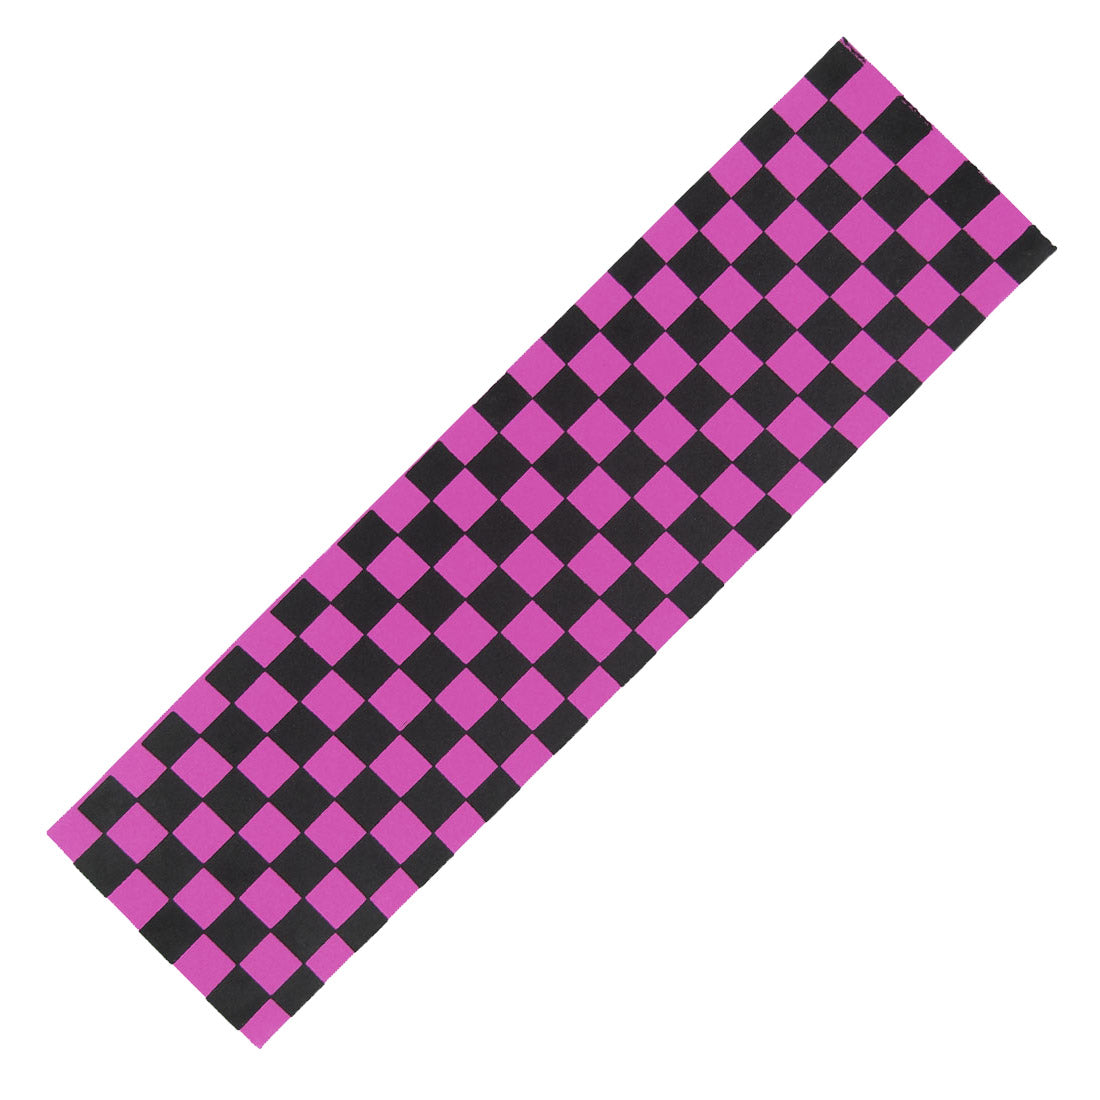 Fruity Griptape - Checkered Black Pink Check Griptape